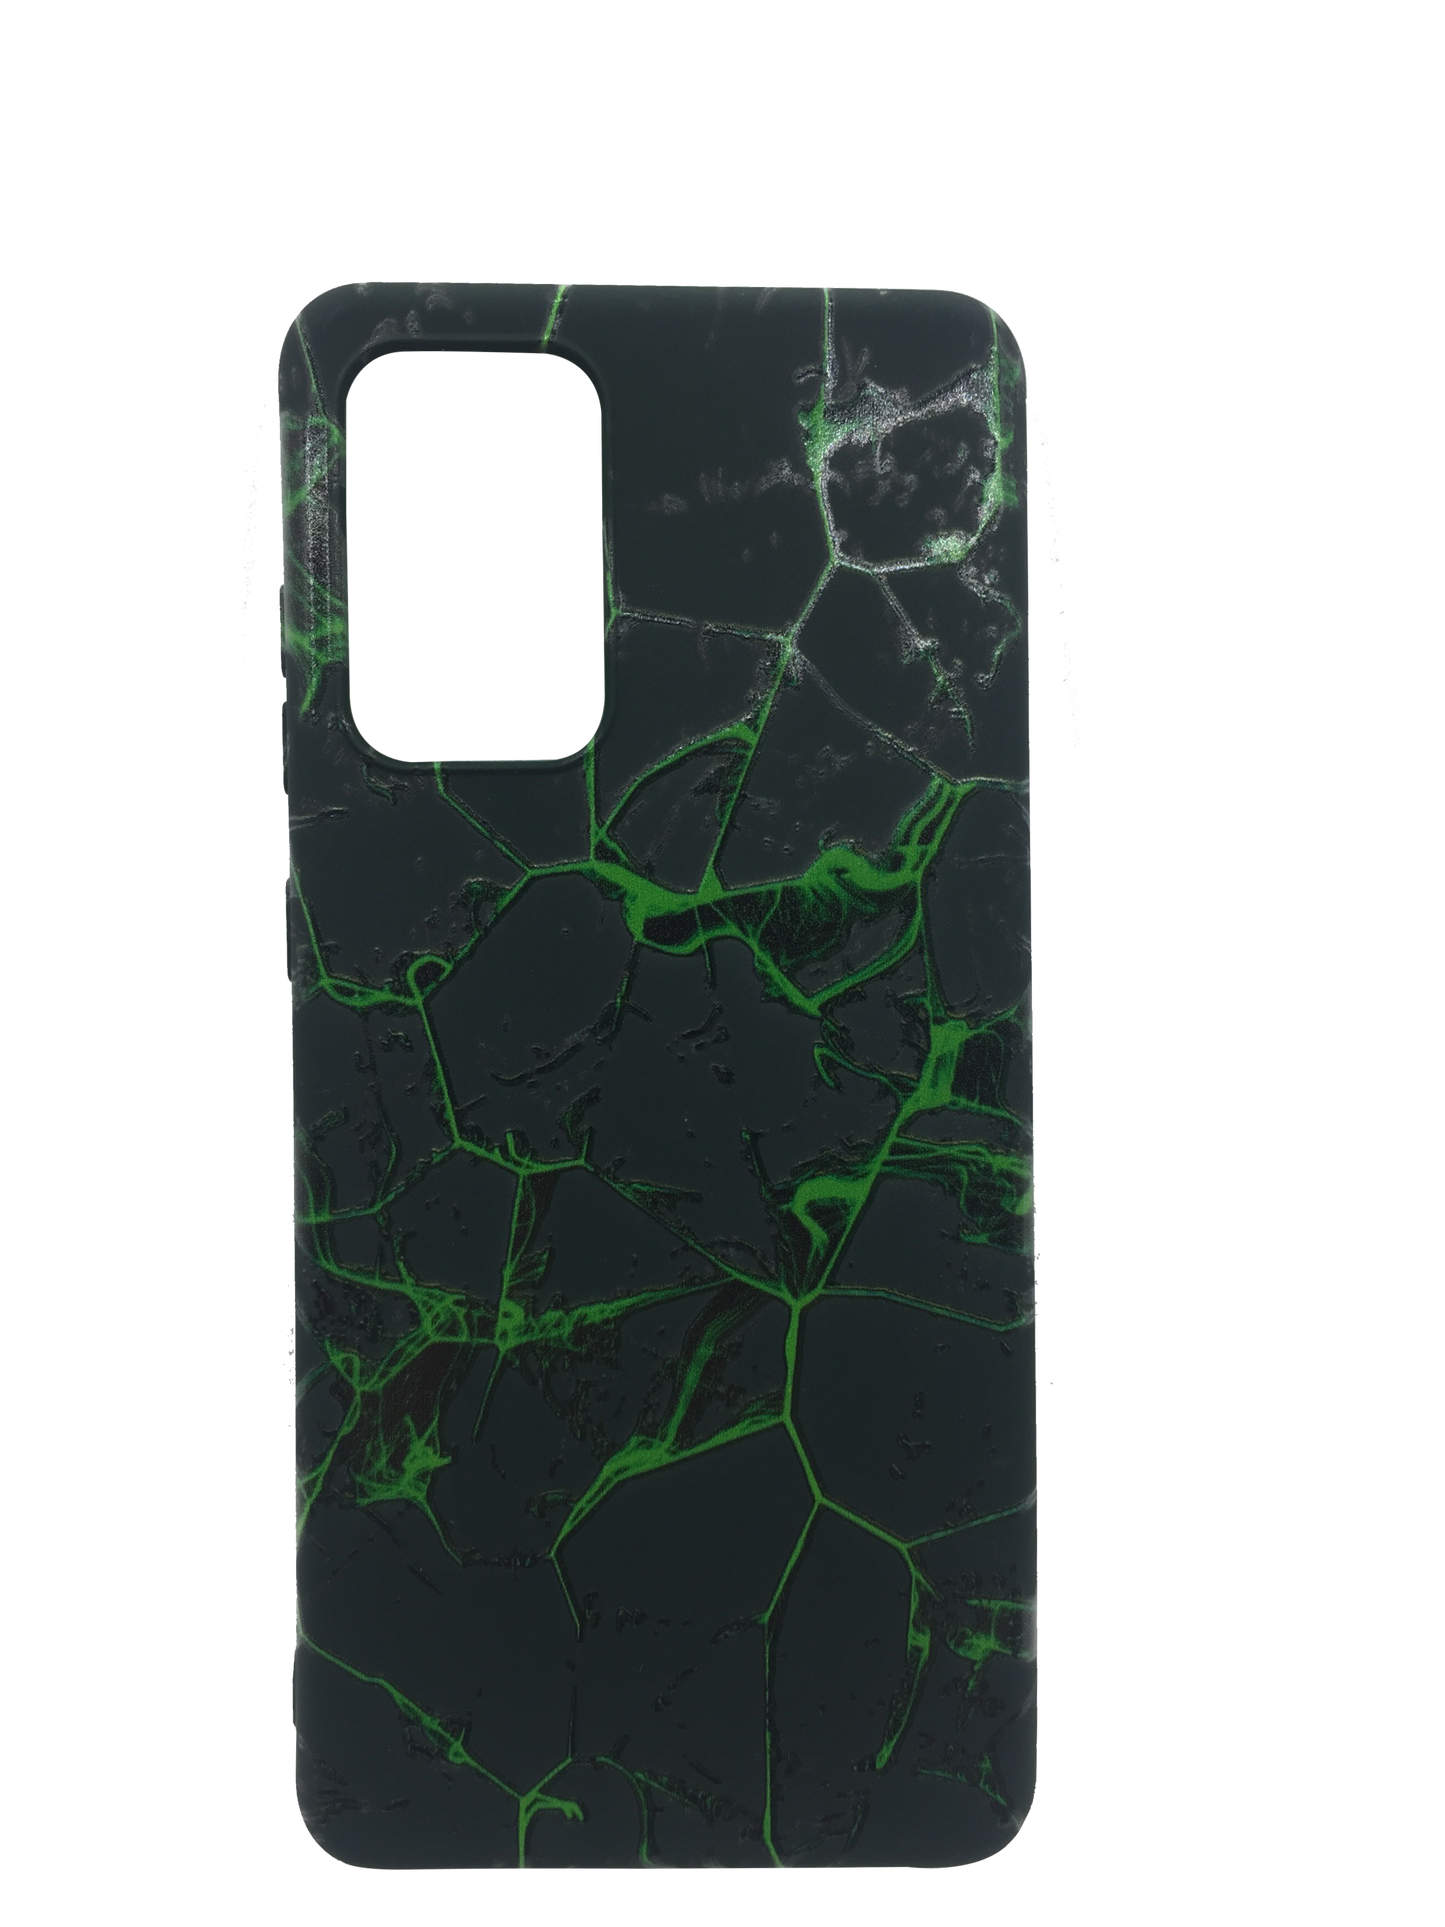 Silicone case Samsung A72 DARK GREEN